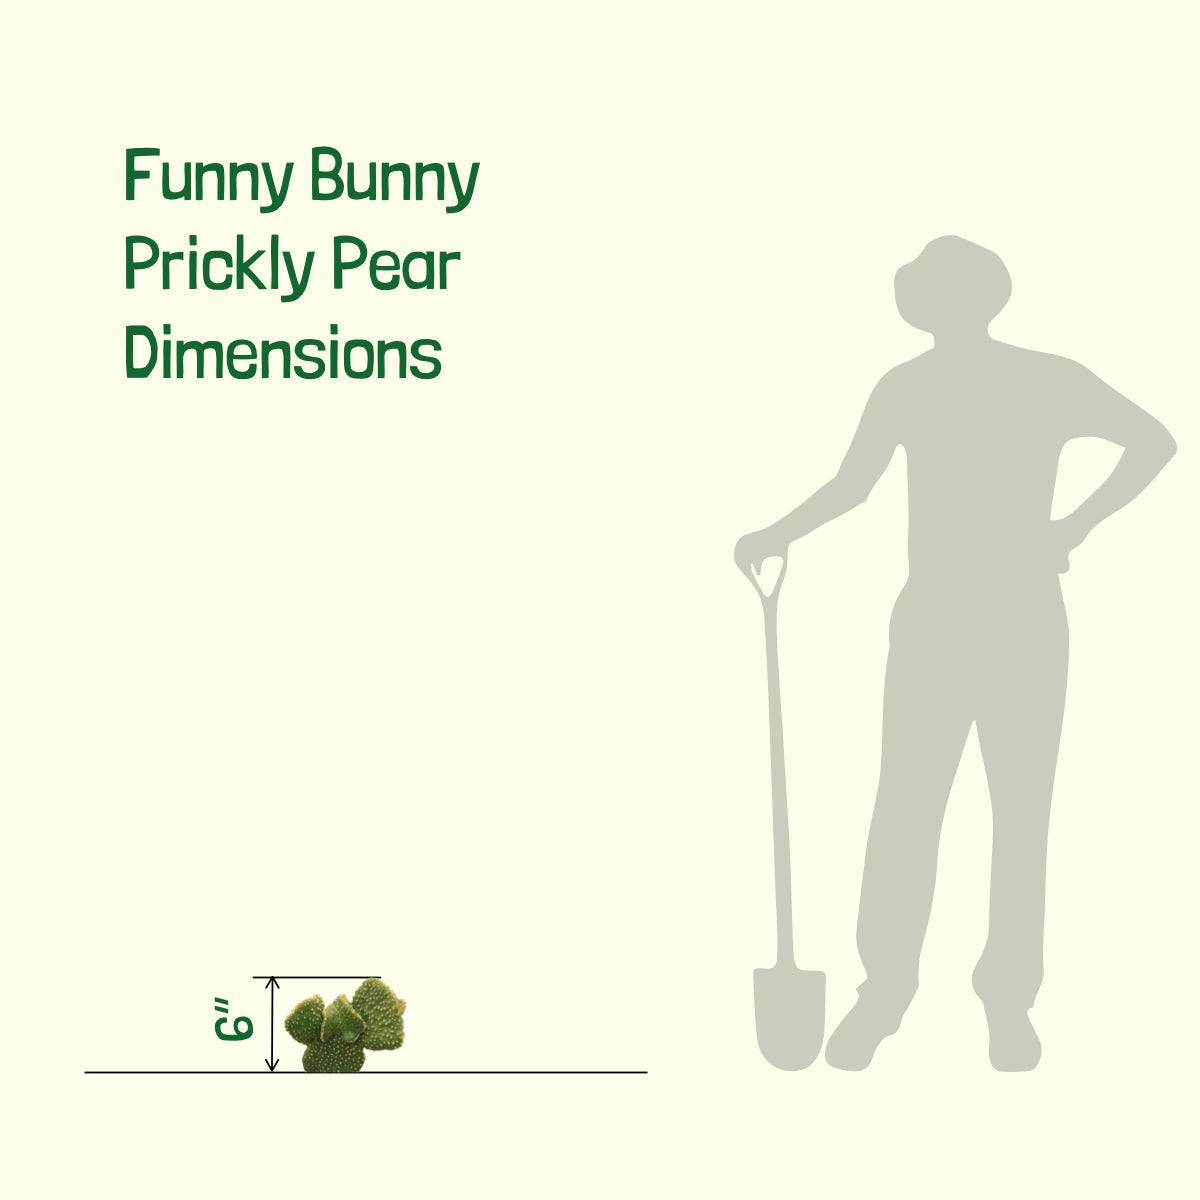 Funny Bunny Prickly Pear